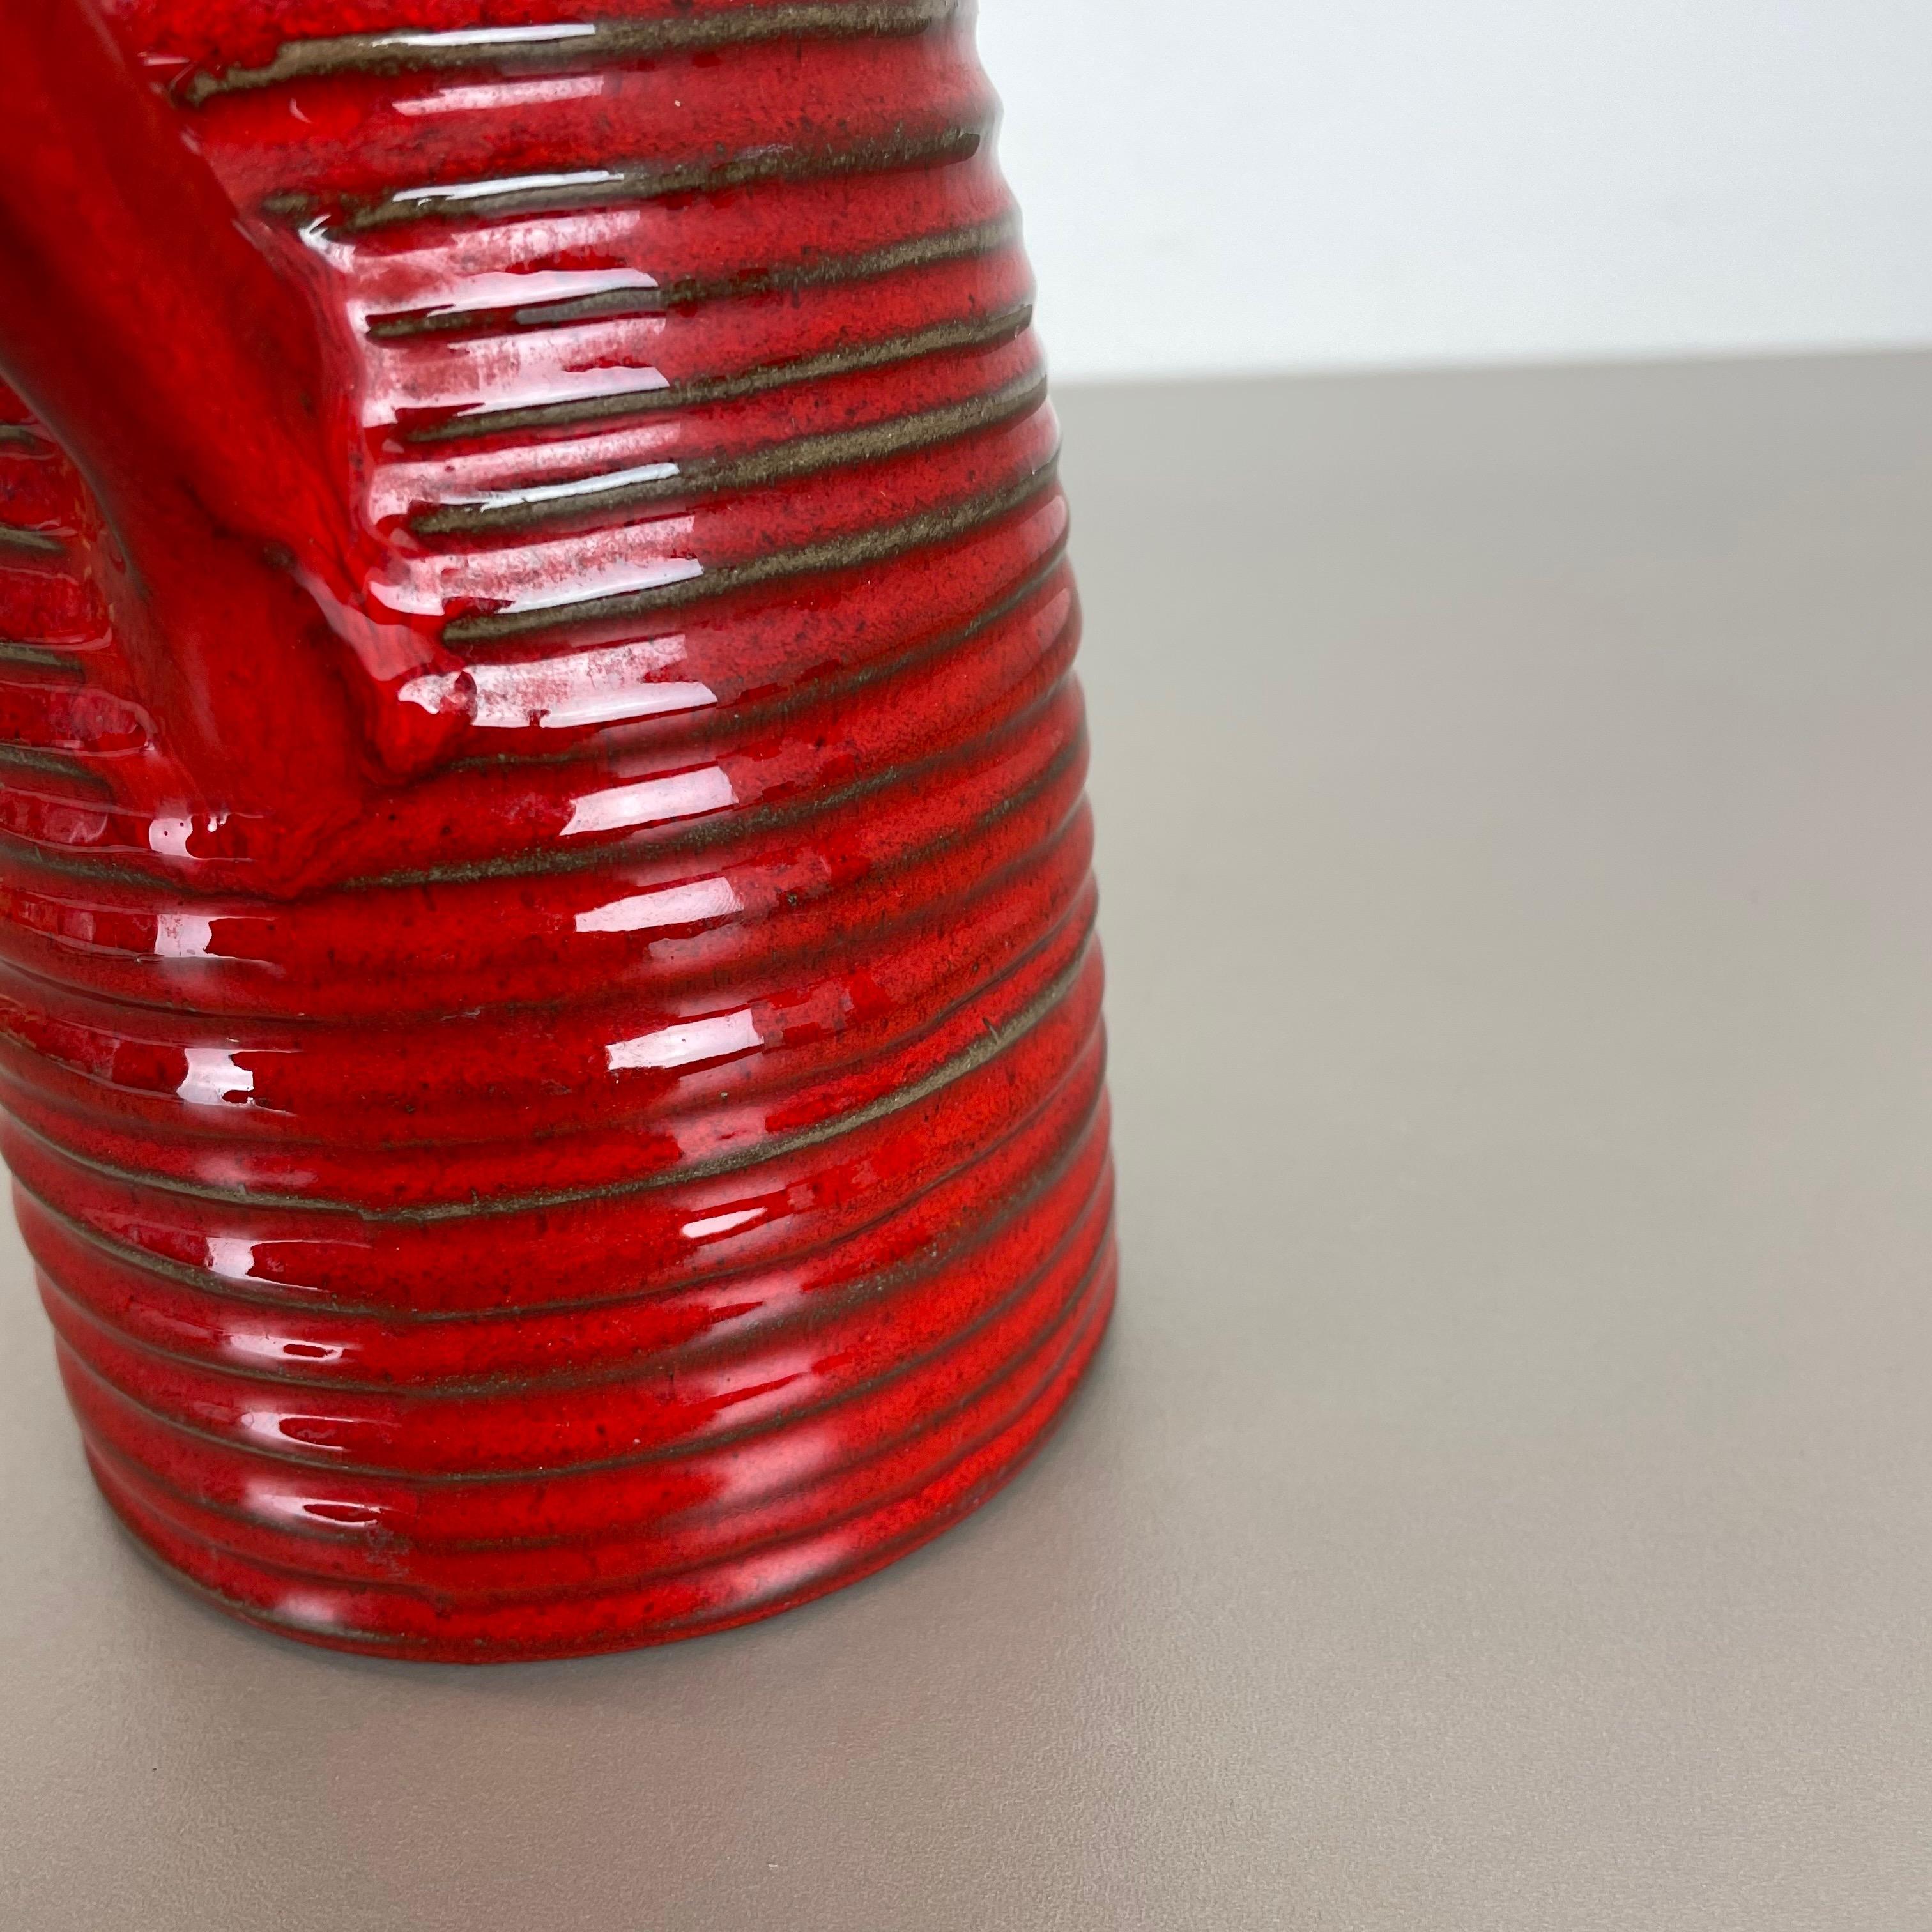 Original 1970 Red Ceramic Studio Pottery Vase by Marei Ceramics, Germany For Sale 8